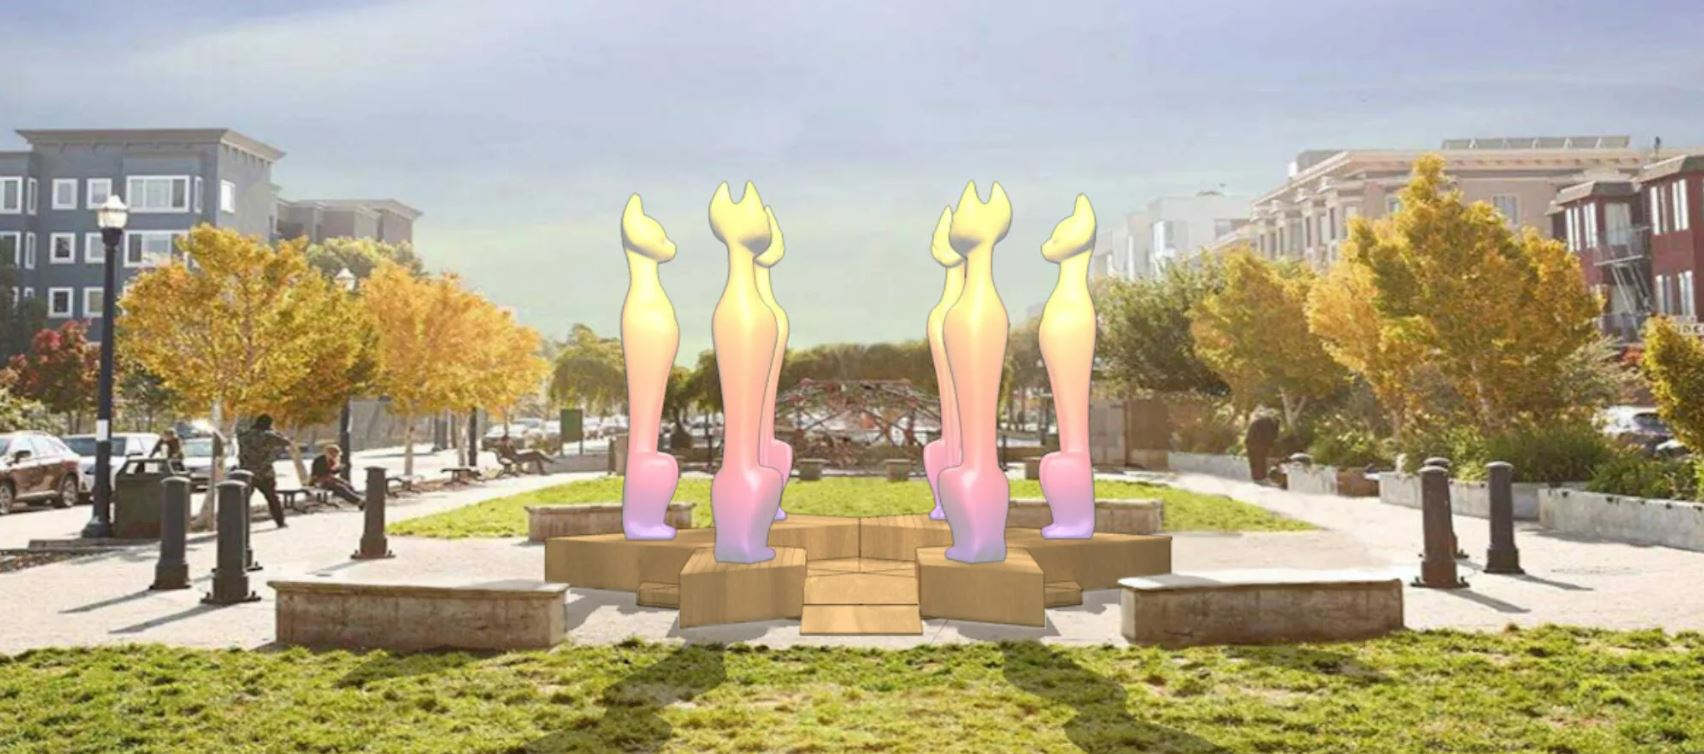 Rendering of Cathenge Sculpture featuring six light up cat sculpture